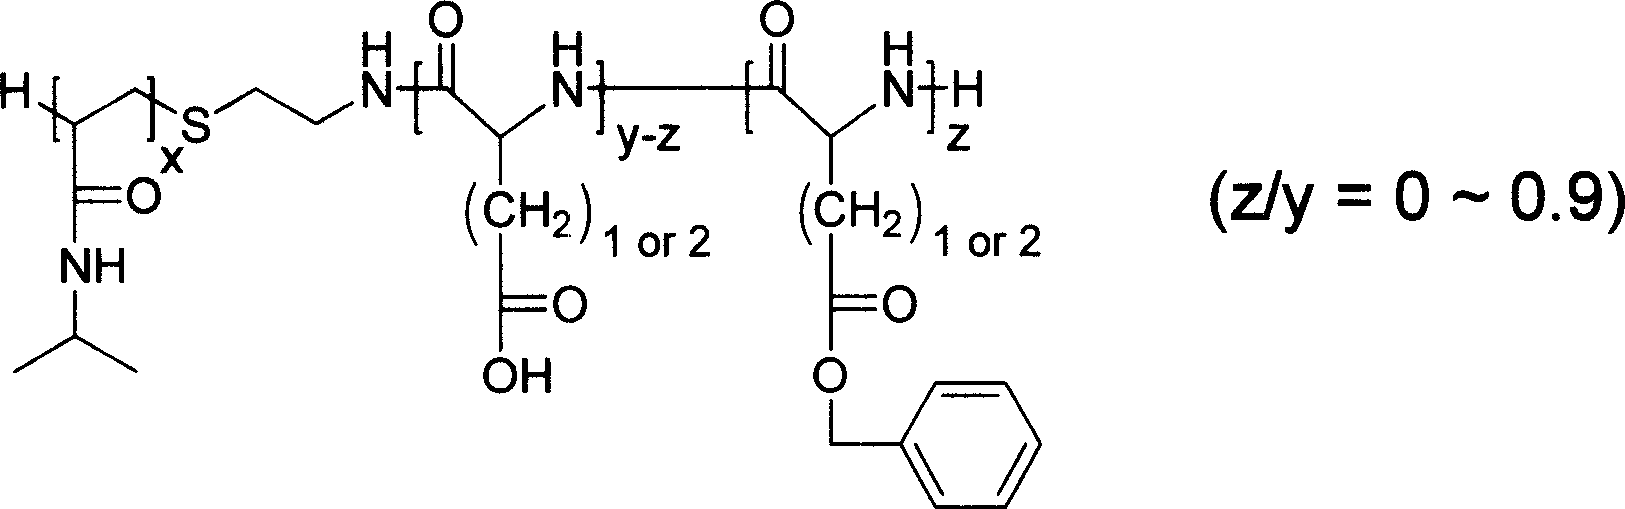 Poly N-isopropyl-acrylic-amide-poly amino-acid two-block copolymer and preparing method